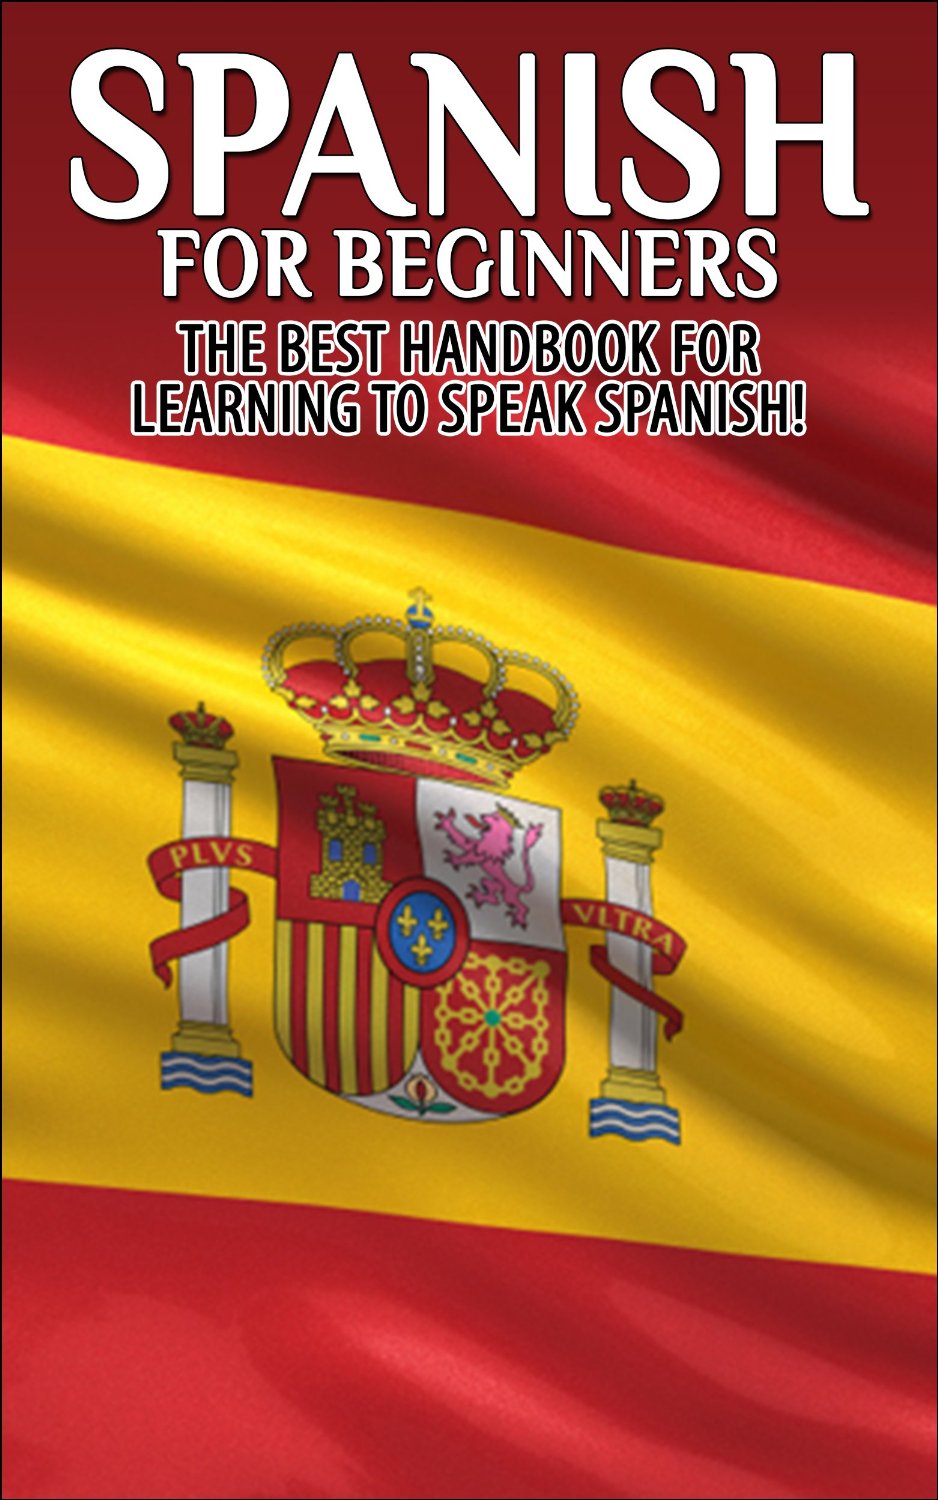 Spanish for Beginners: The best handbook for learning to speak Spanish! (Spain, Spanish, Learn Spanish, Speak Spanish, Spanish Language, Learning Spanish, Speaking Spanish, Learn To Speak Spanish) by Getaway Guides